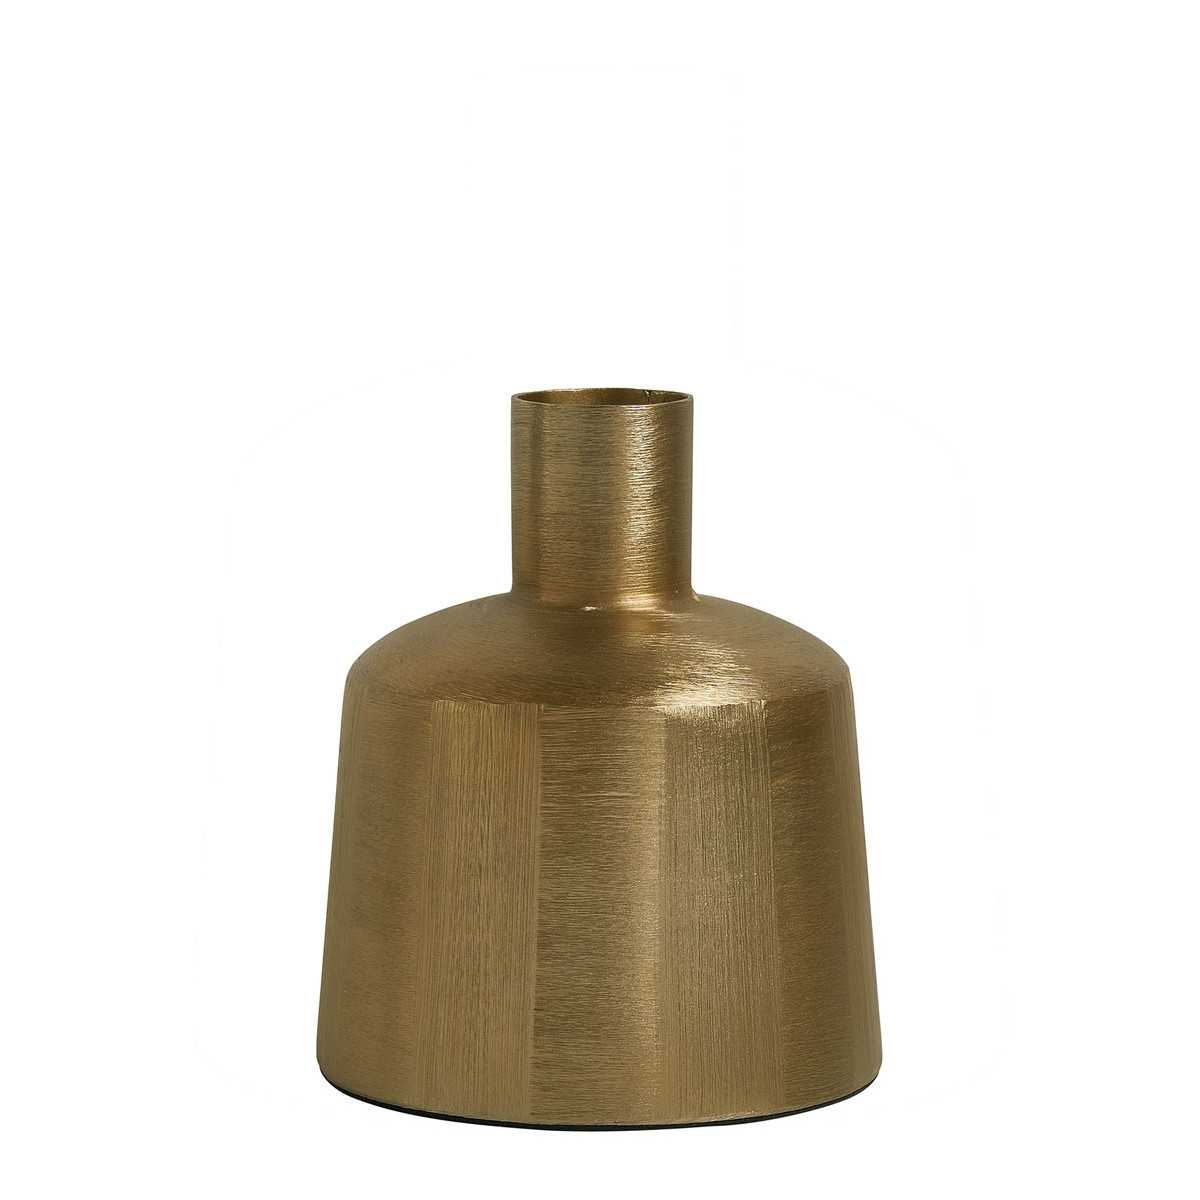 ELIAS Vase aus vergoldetem Metall - Kleines Modell - H. 22 cm